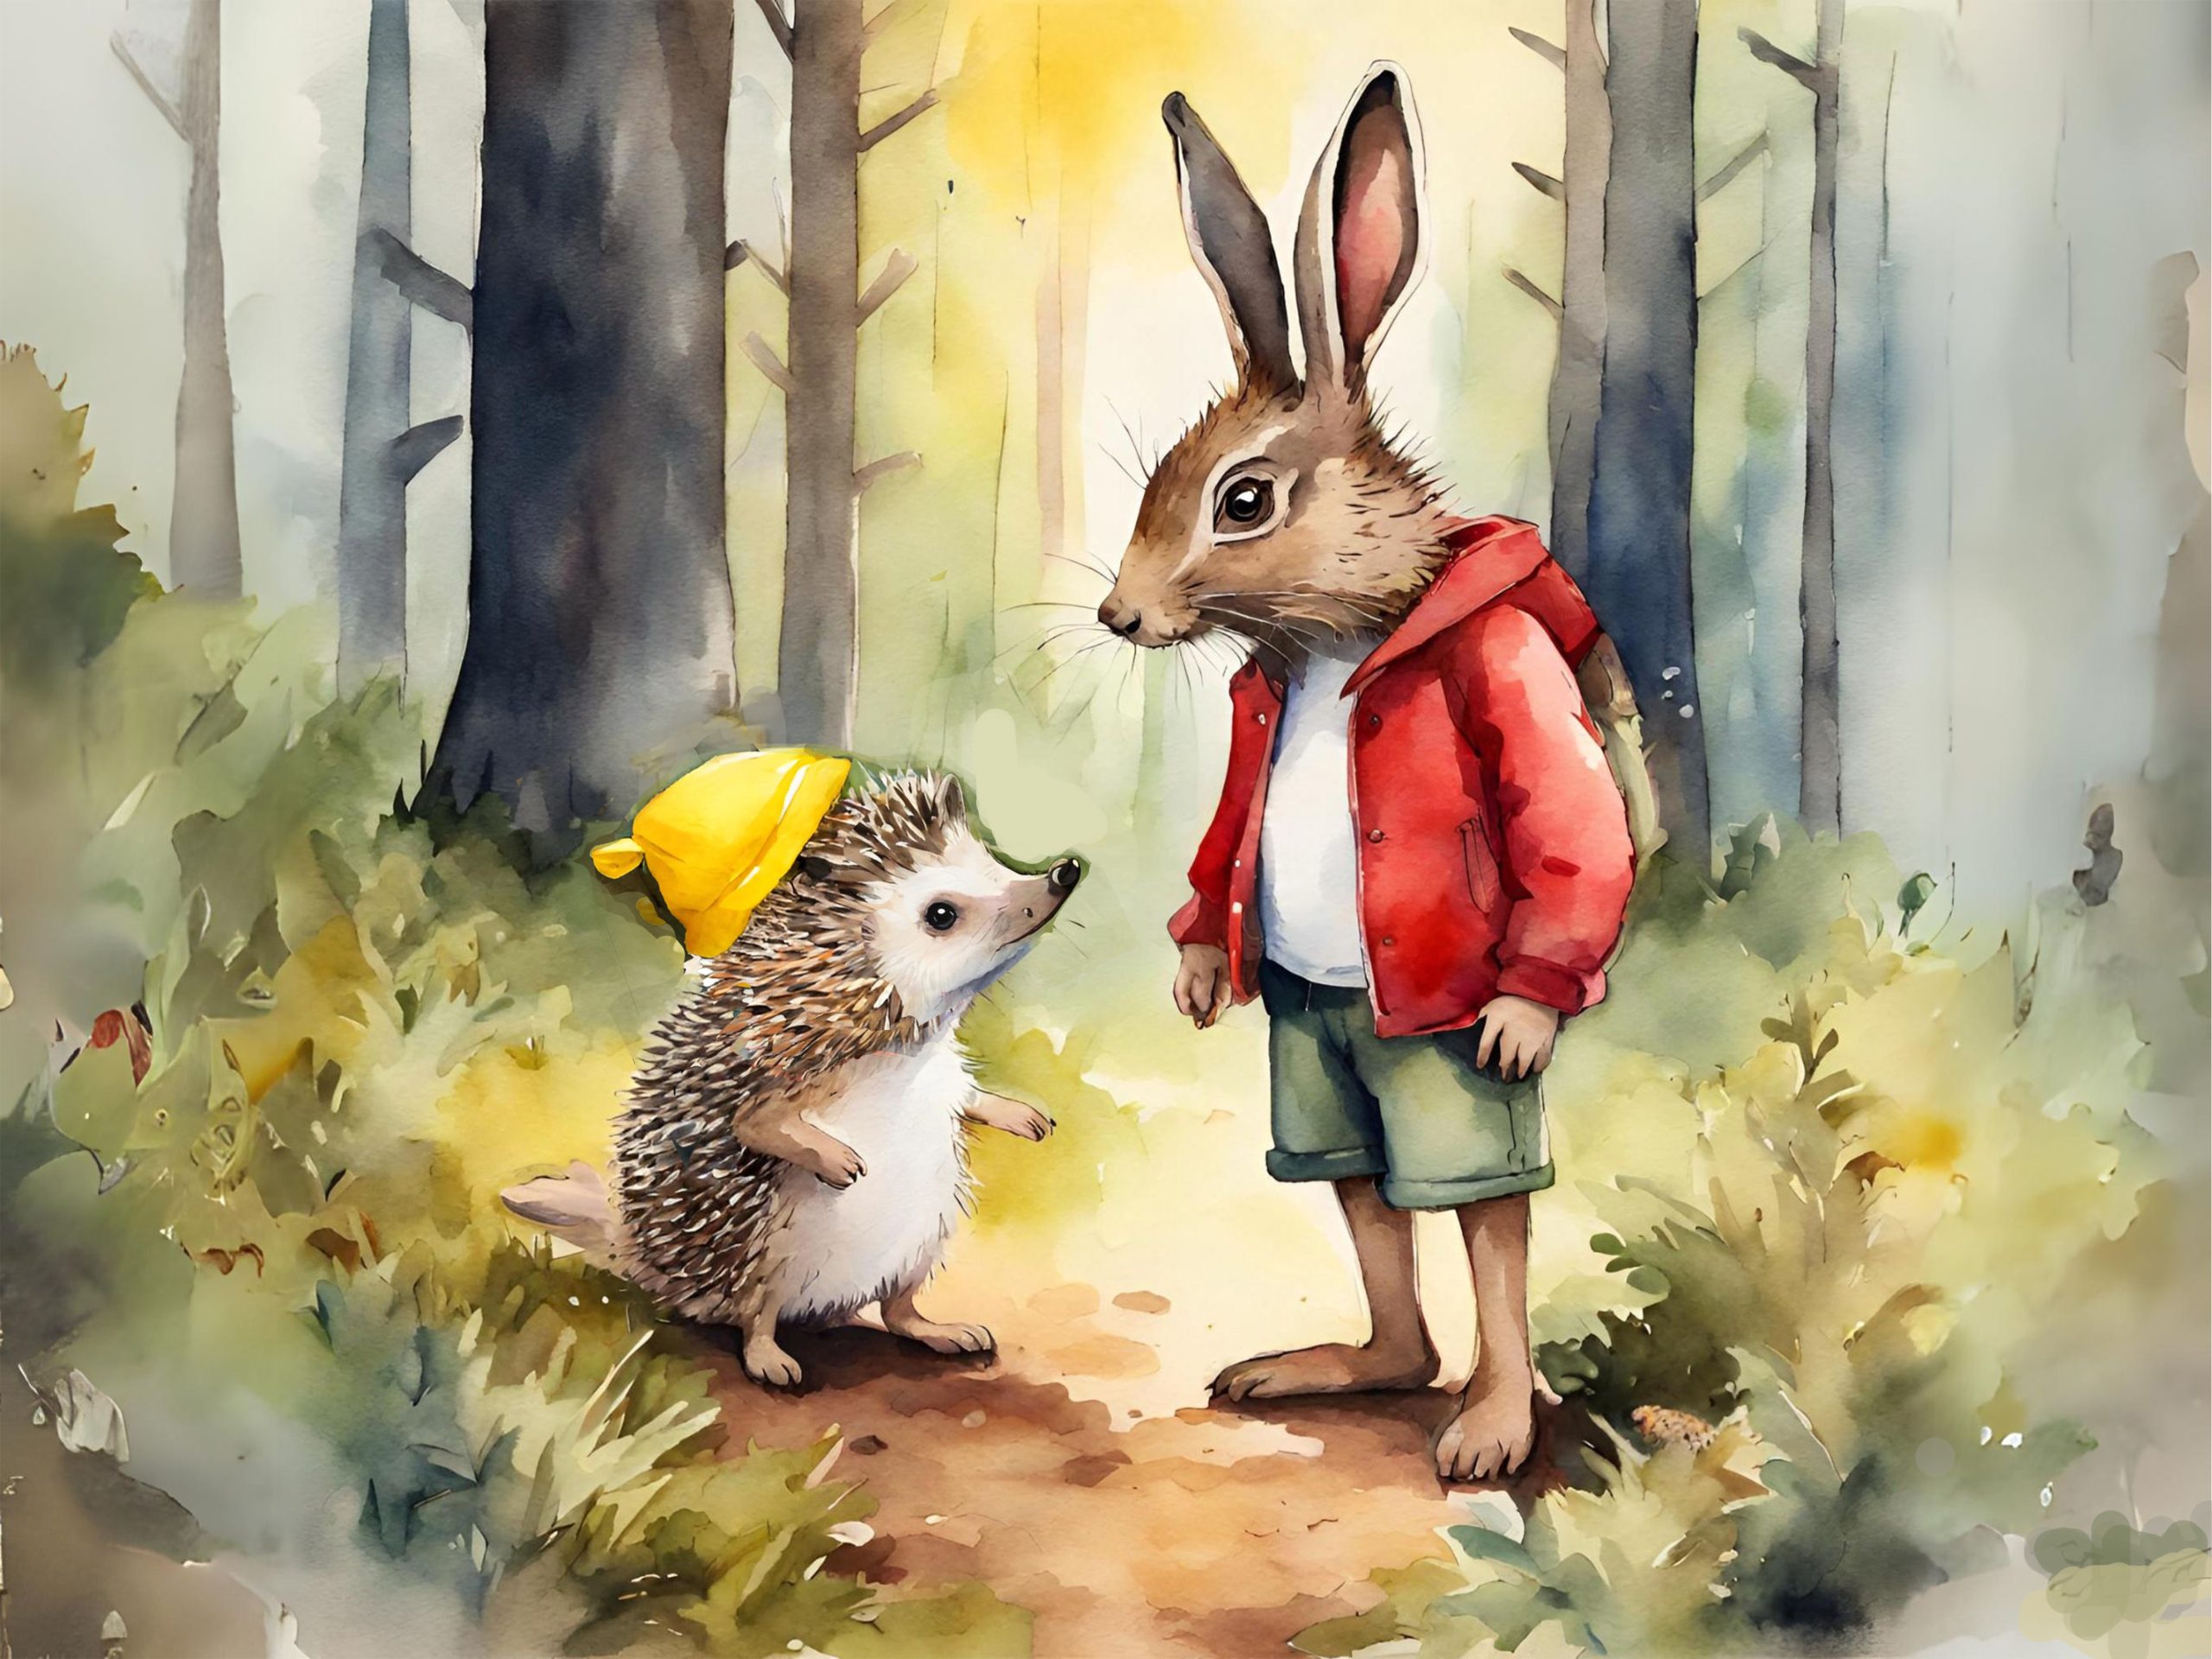 Hedgehog and hare fairy tale